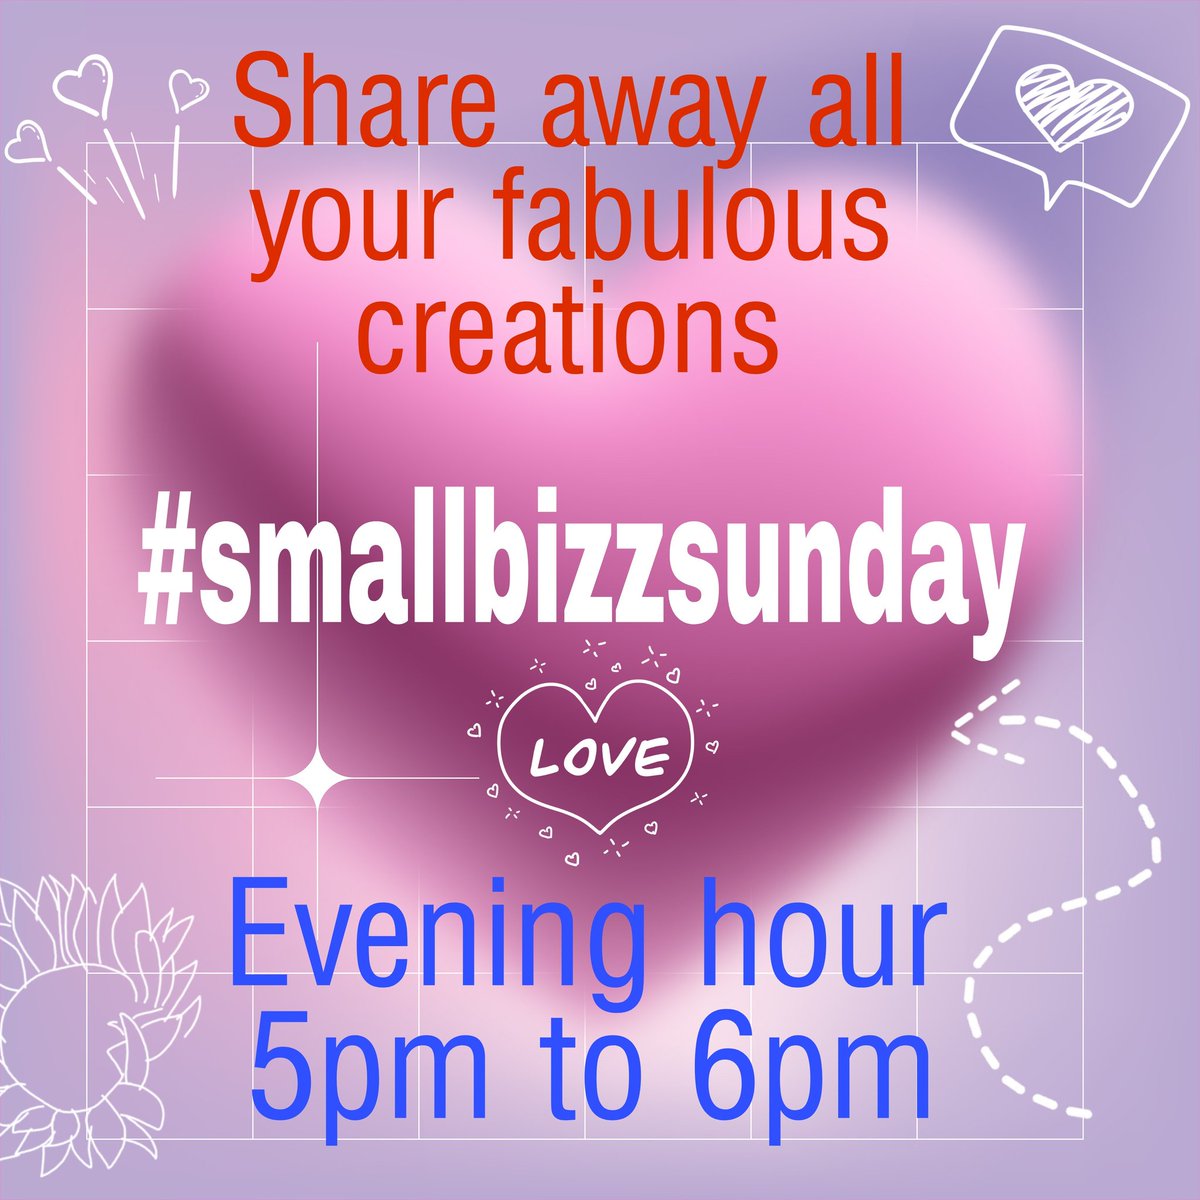 New Sunday hour share 5pm to 6pm 
 #smallbizzsunday